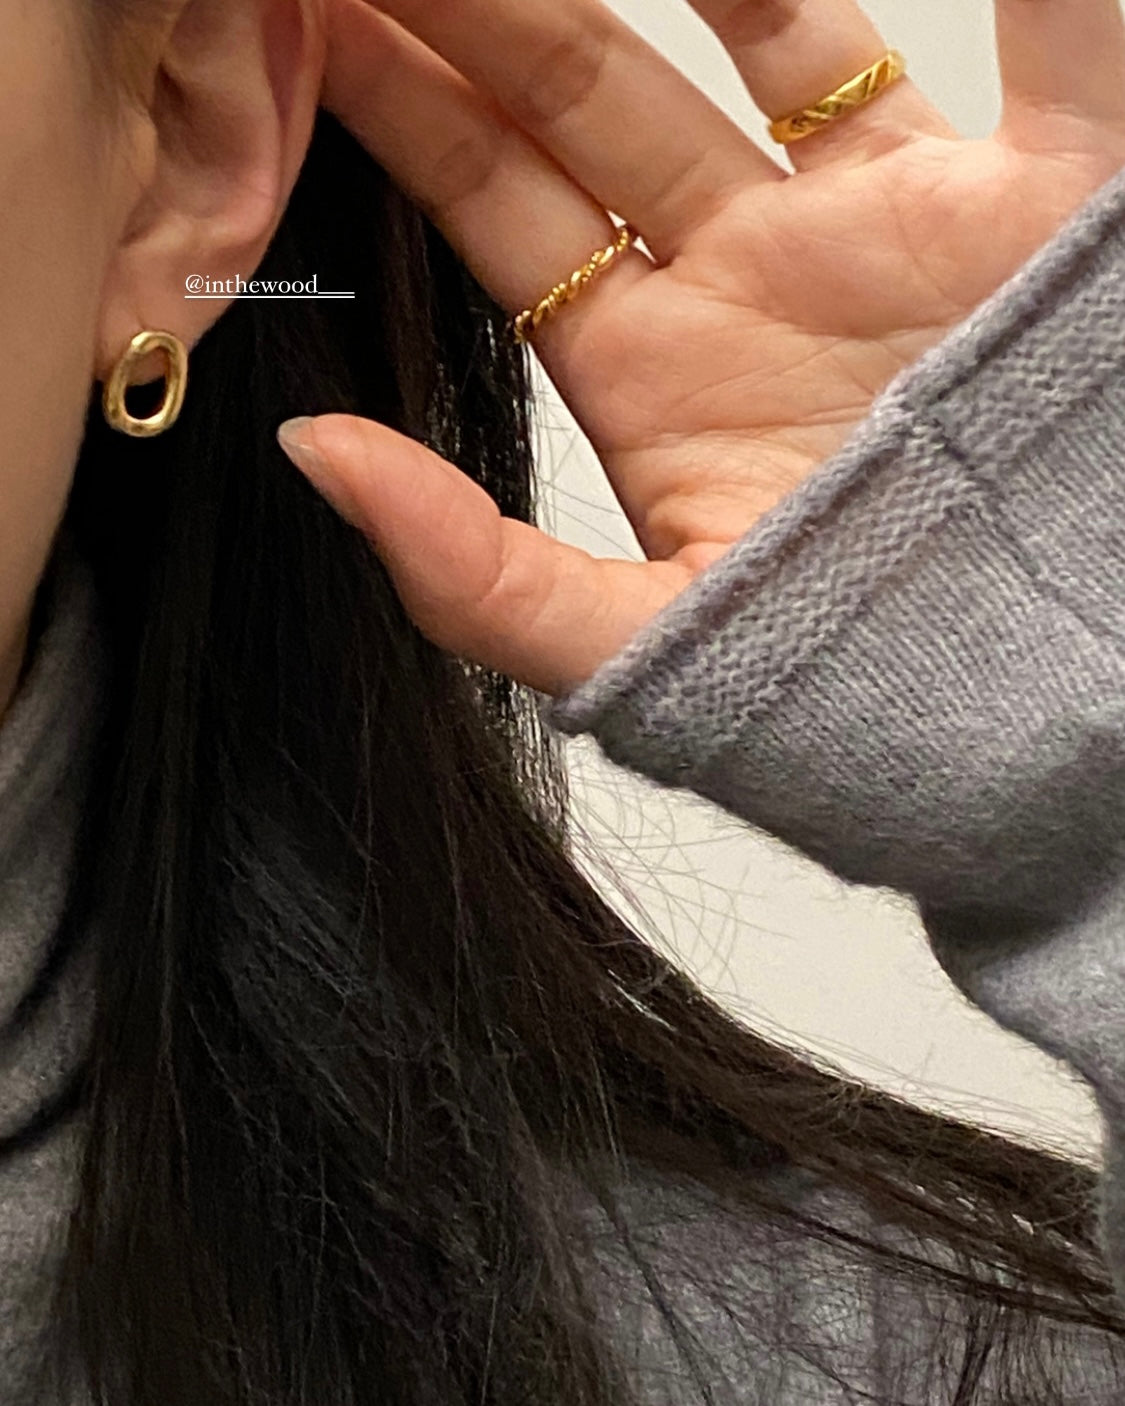 [925silver] Basic O Earrings